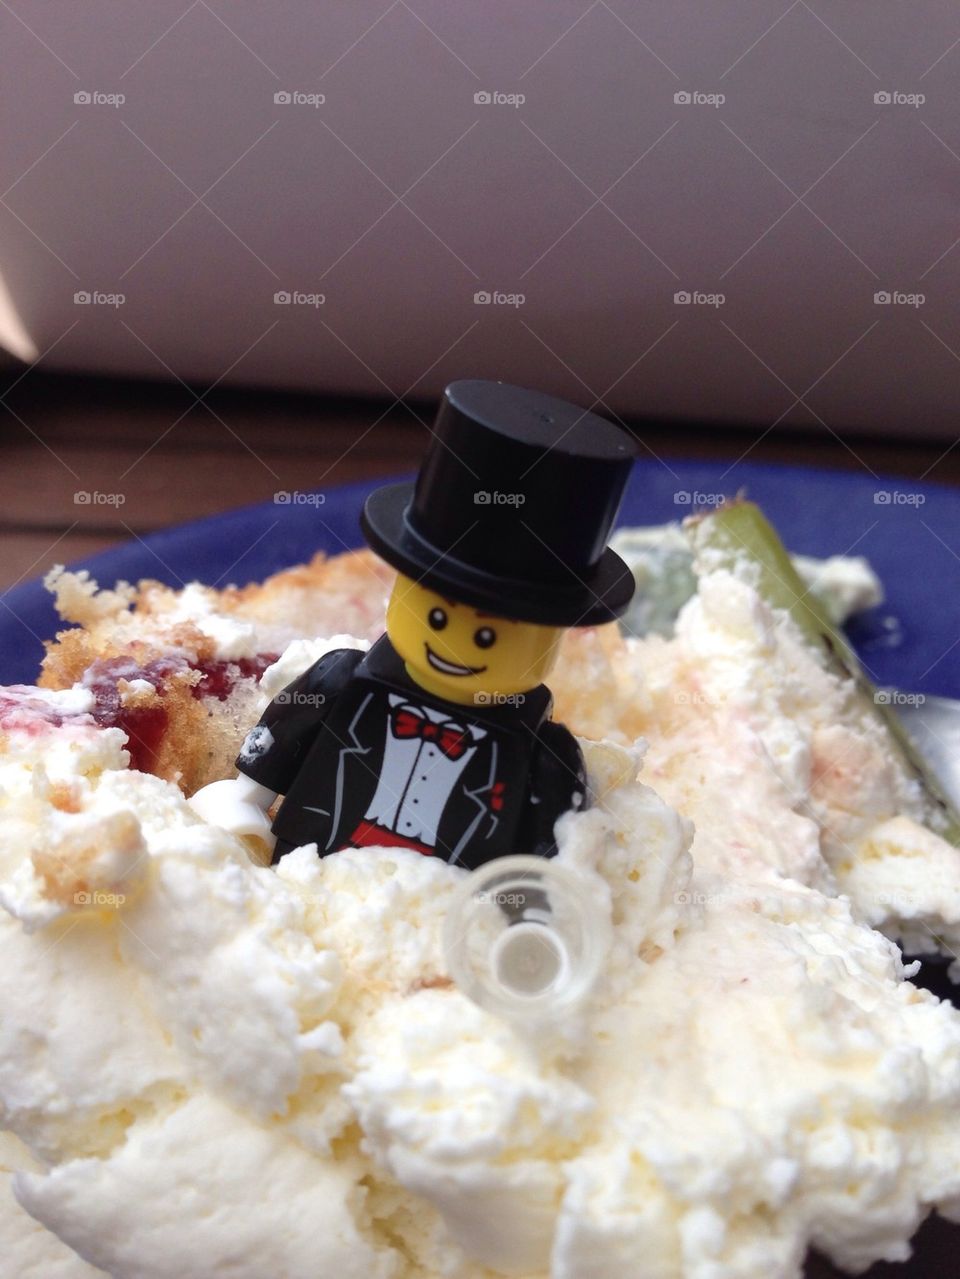 Lego groom on cake